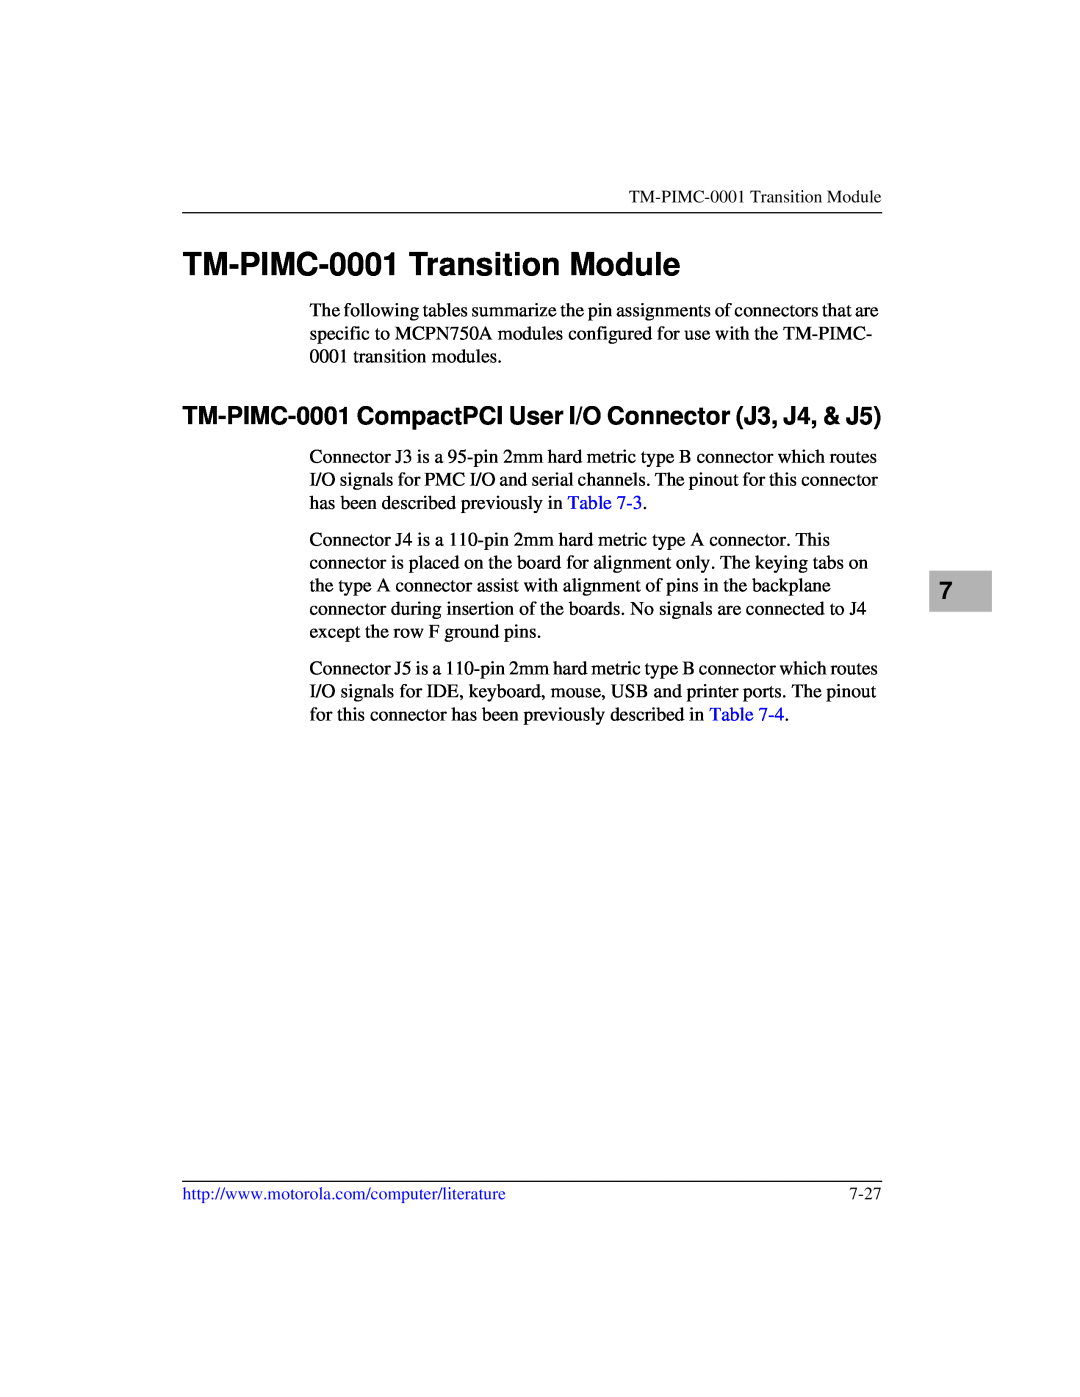 Motorola IH5, MCPN750A manual TM-PIMC-0001 Transition Module, TM-PIMC-0001 CompactPCI User I/O Connector J3, J4, & J5 